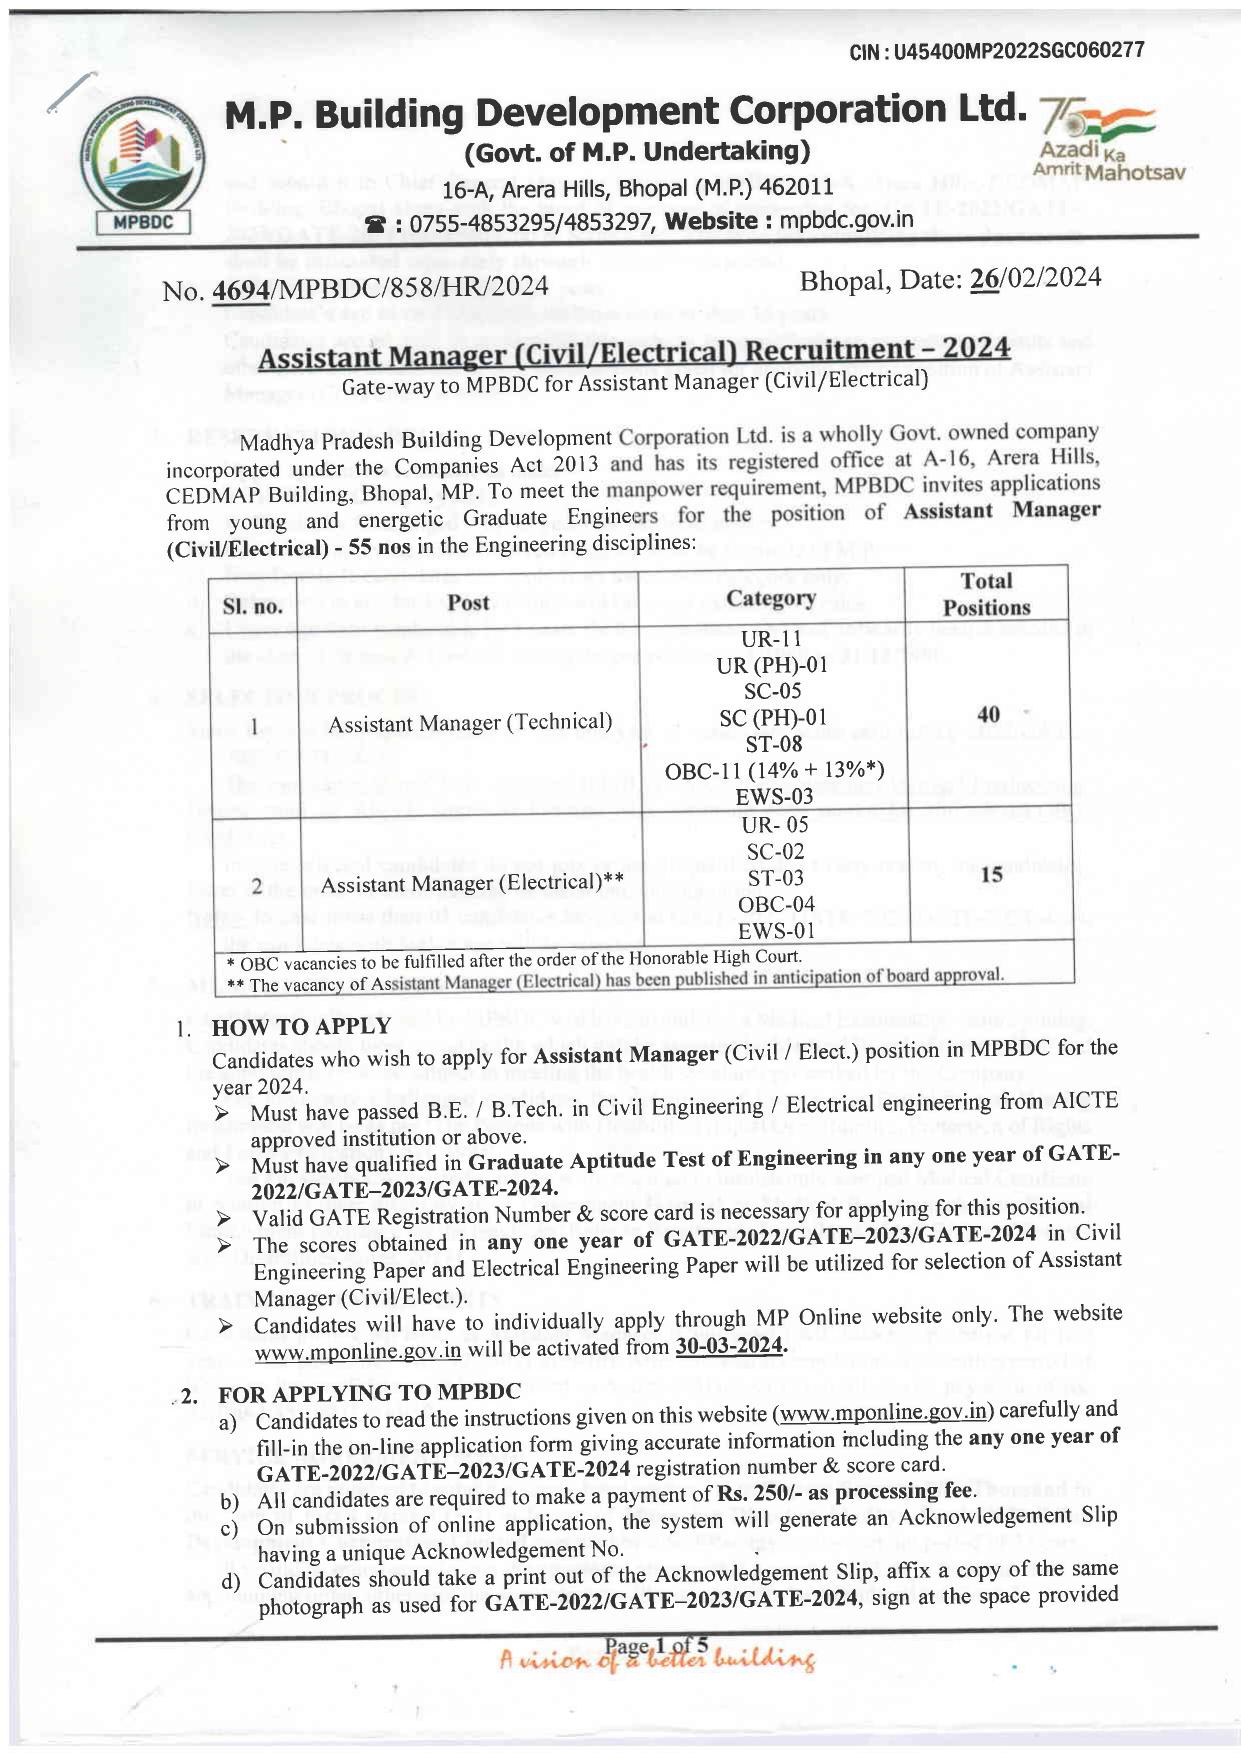 Madhya Pradesh Building Development Corporation (MPBDC) Assistant Manager Recruitment 2024 - Page 1